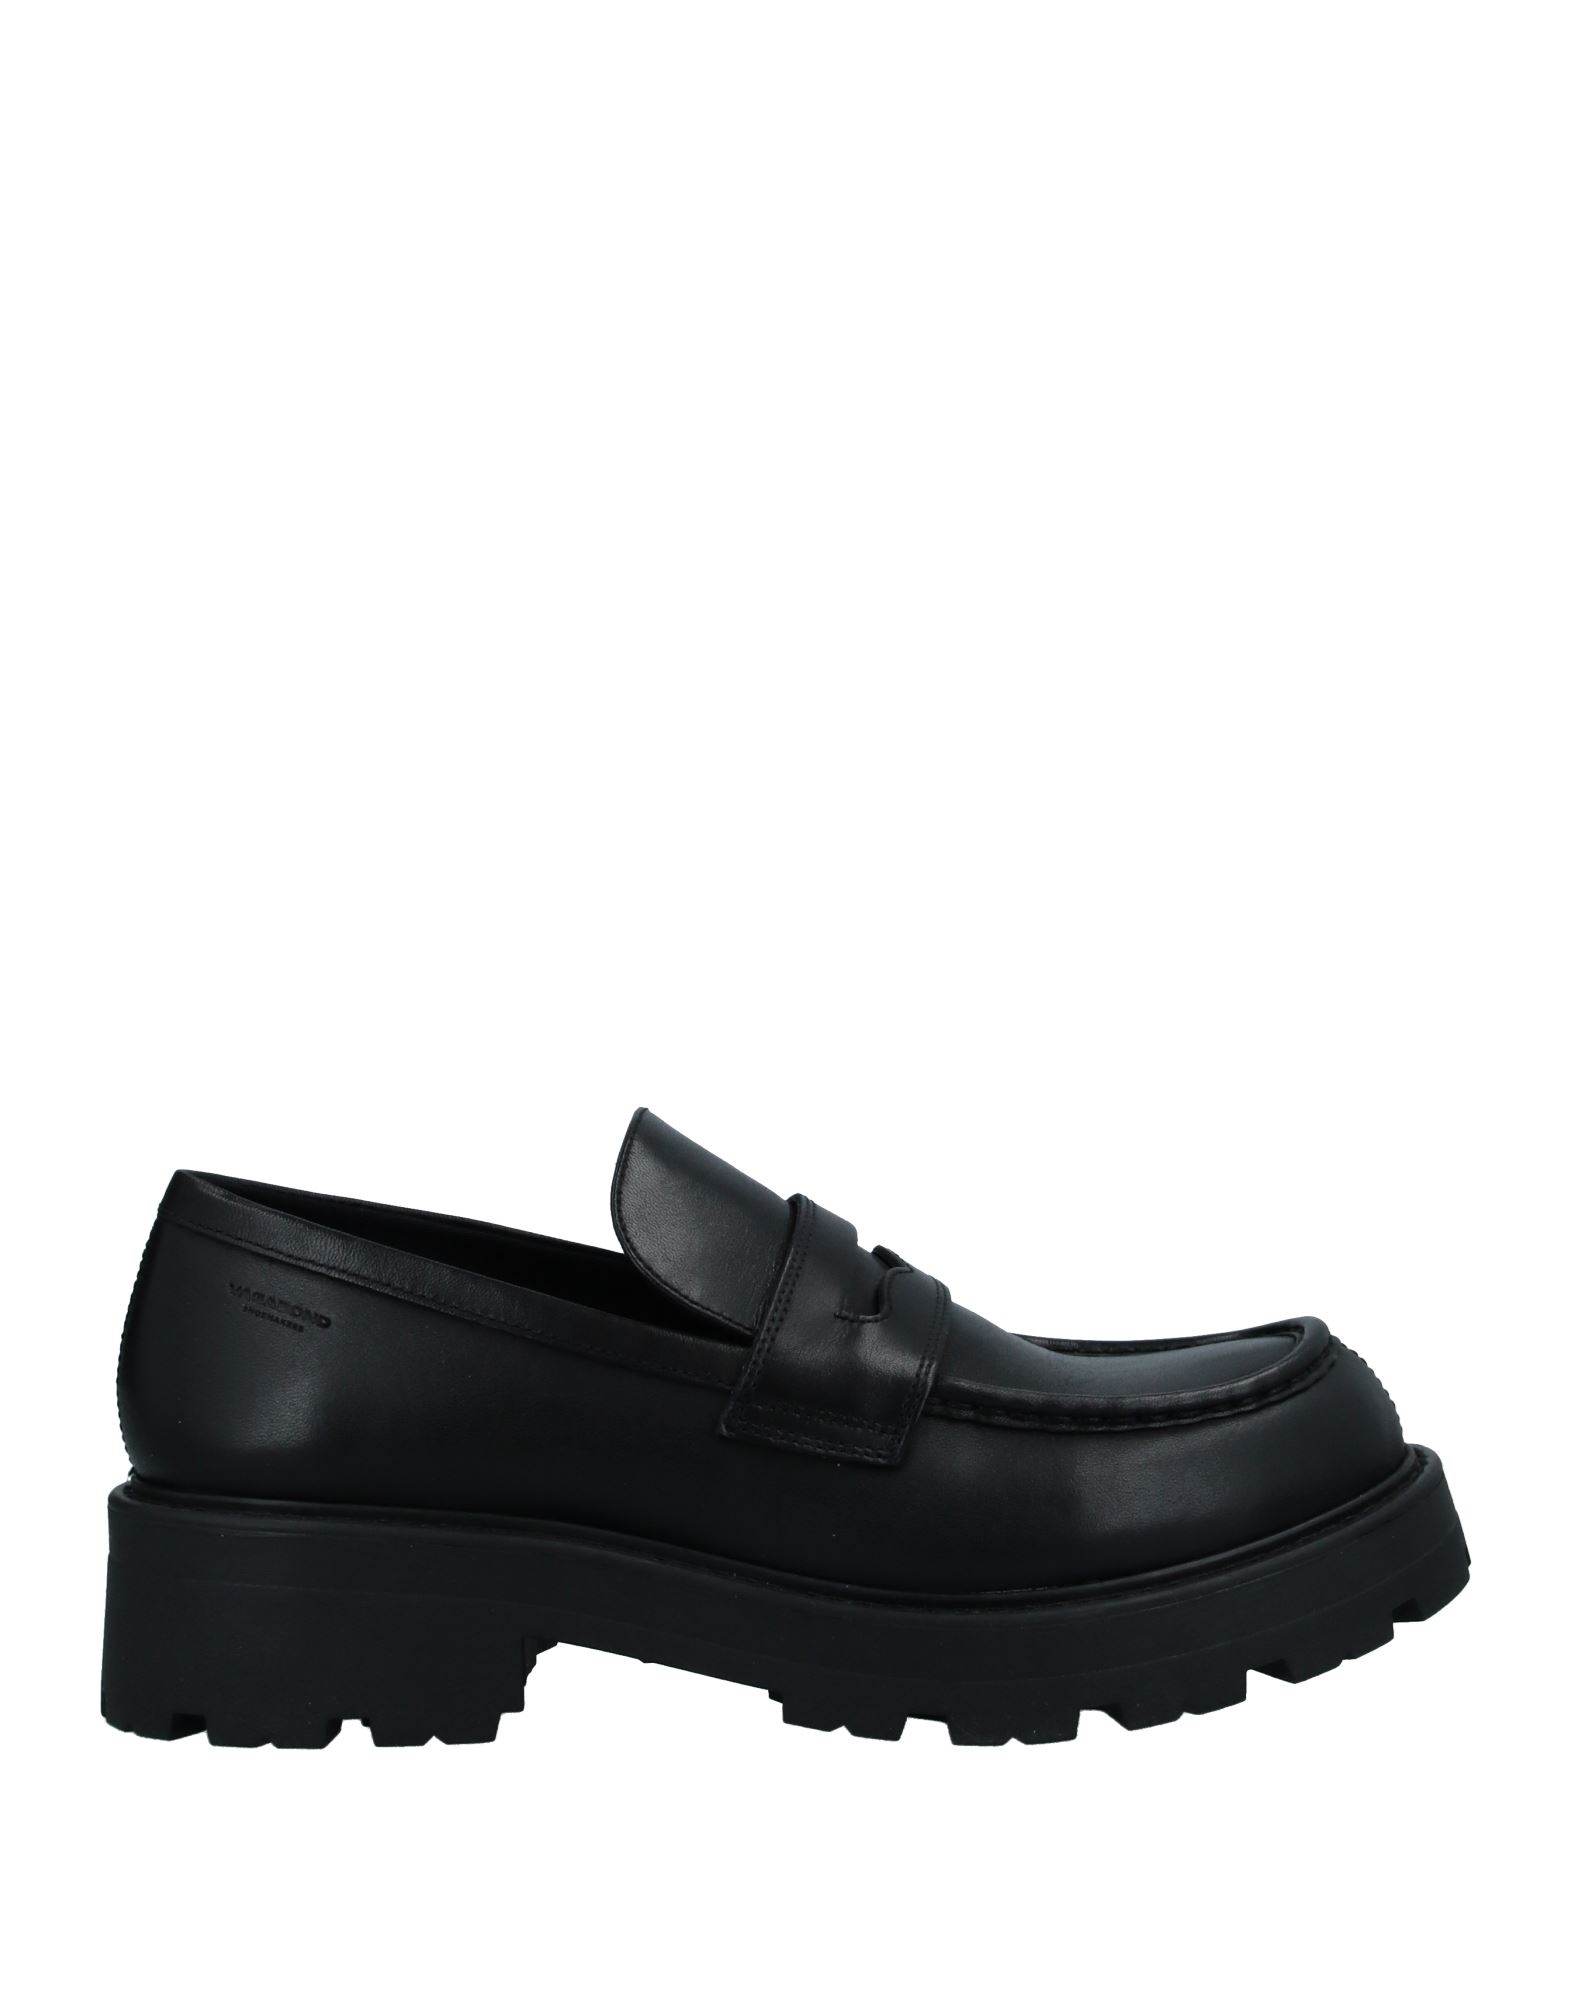 Shop Vagabond Shoemakers Woman Loafers Black Size 9.5 Soft Leather